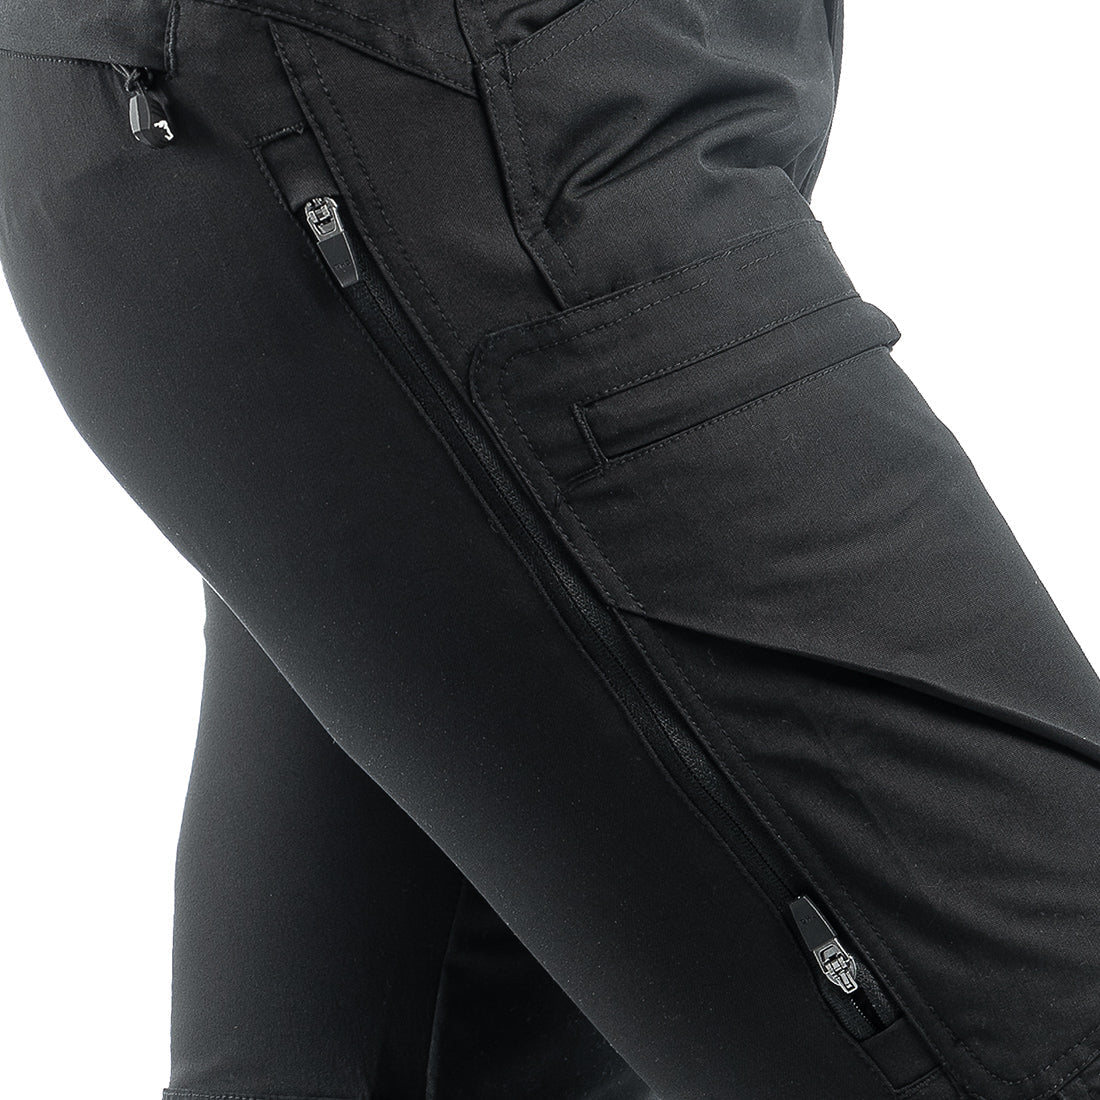 Premium Performance Black Stretch Pants